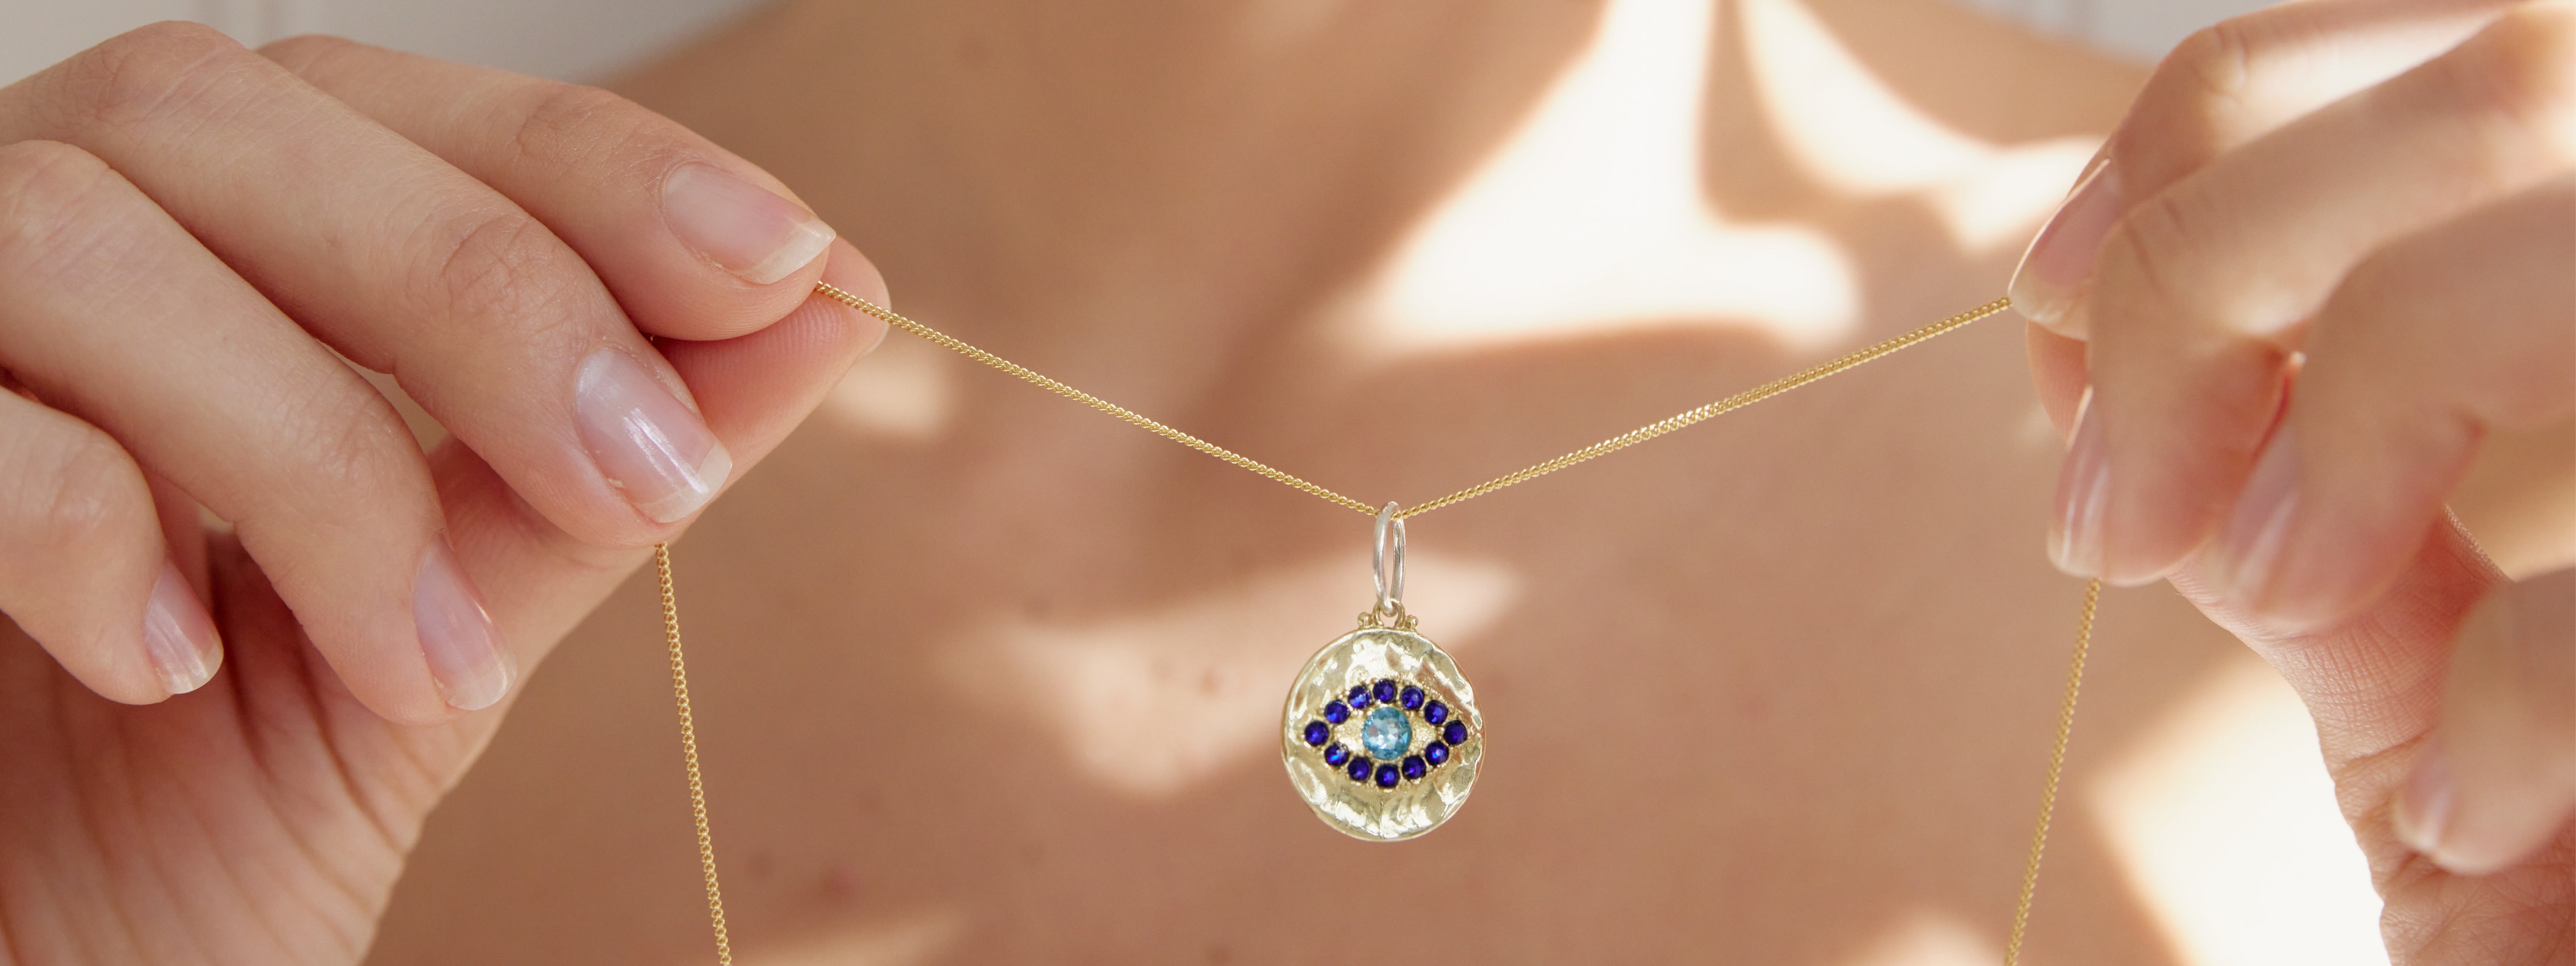 Crystal Blue Pendant Necklace – Ultimate Gear Shop